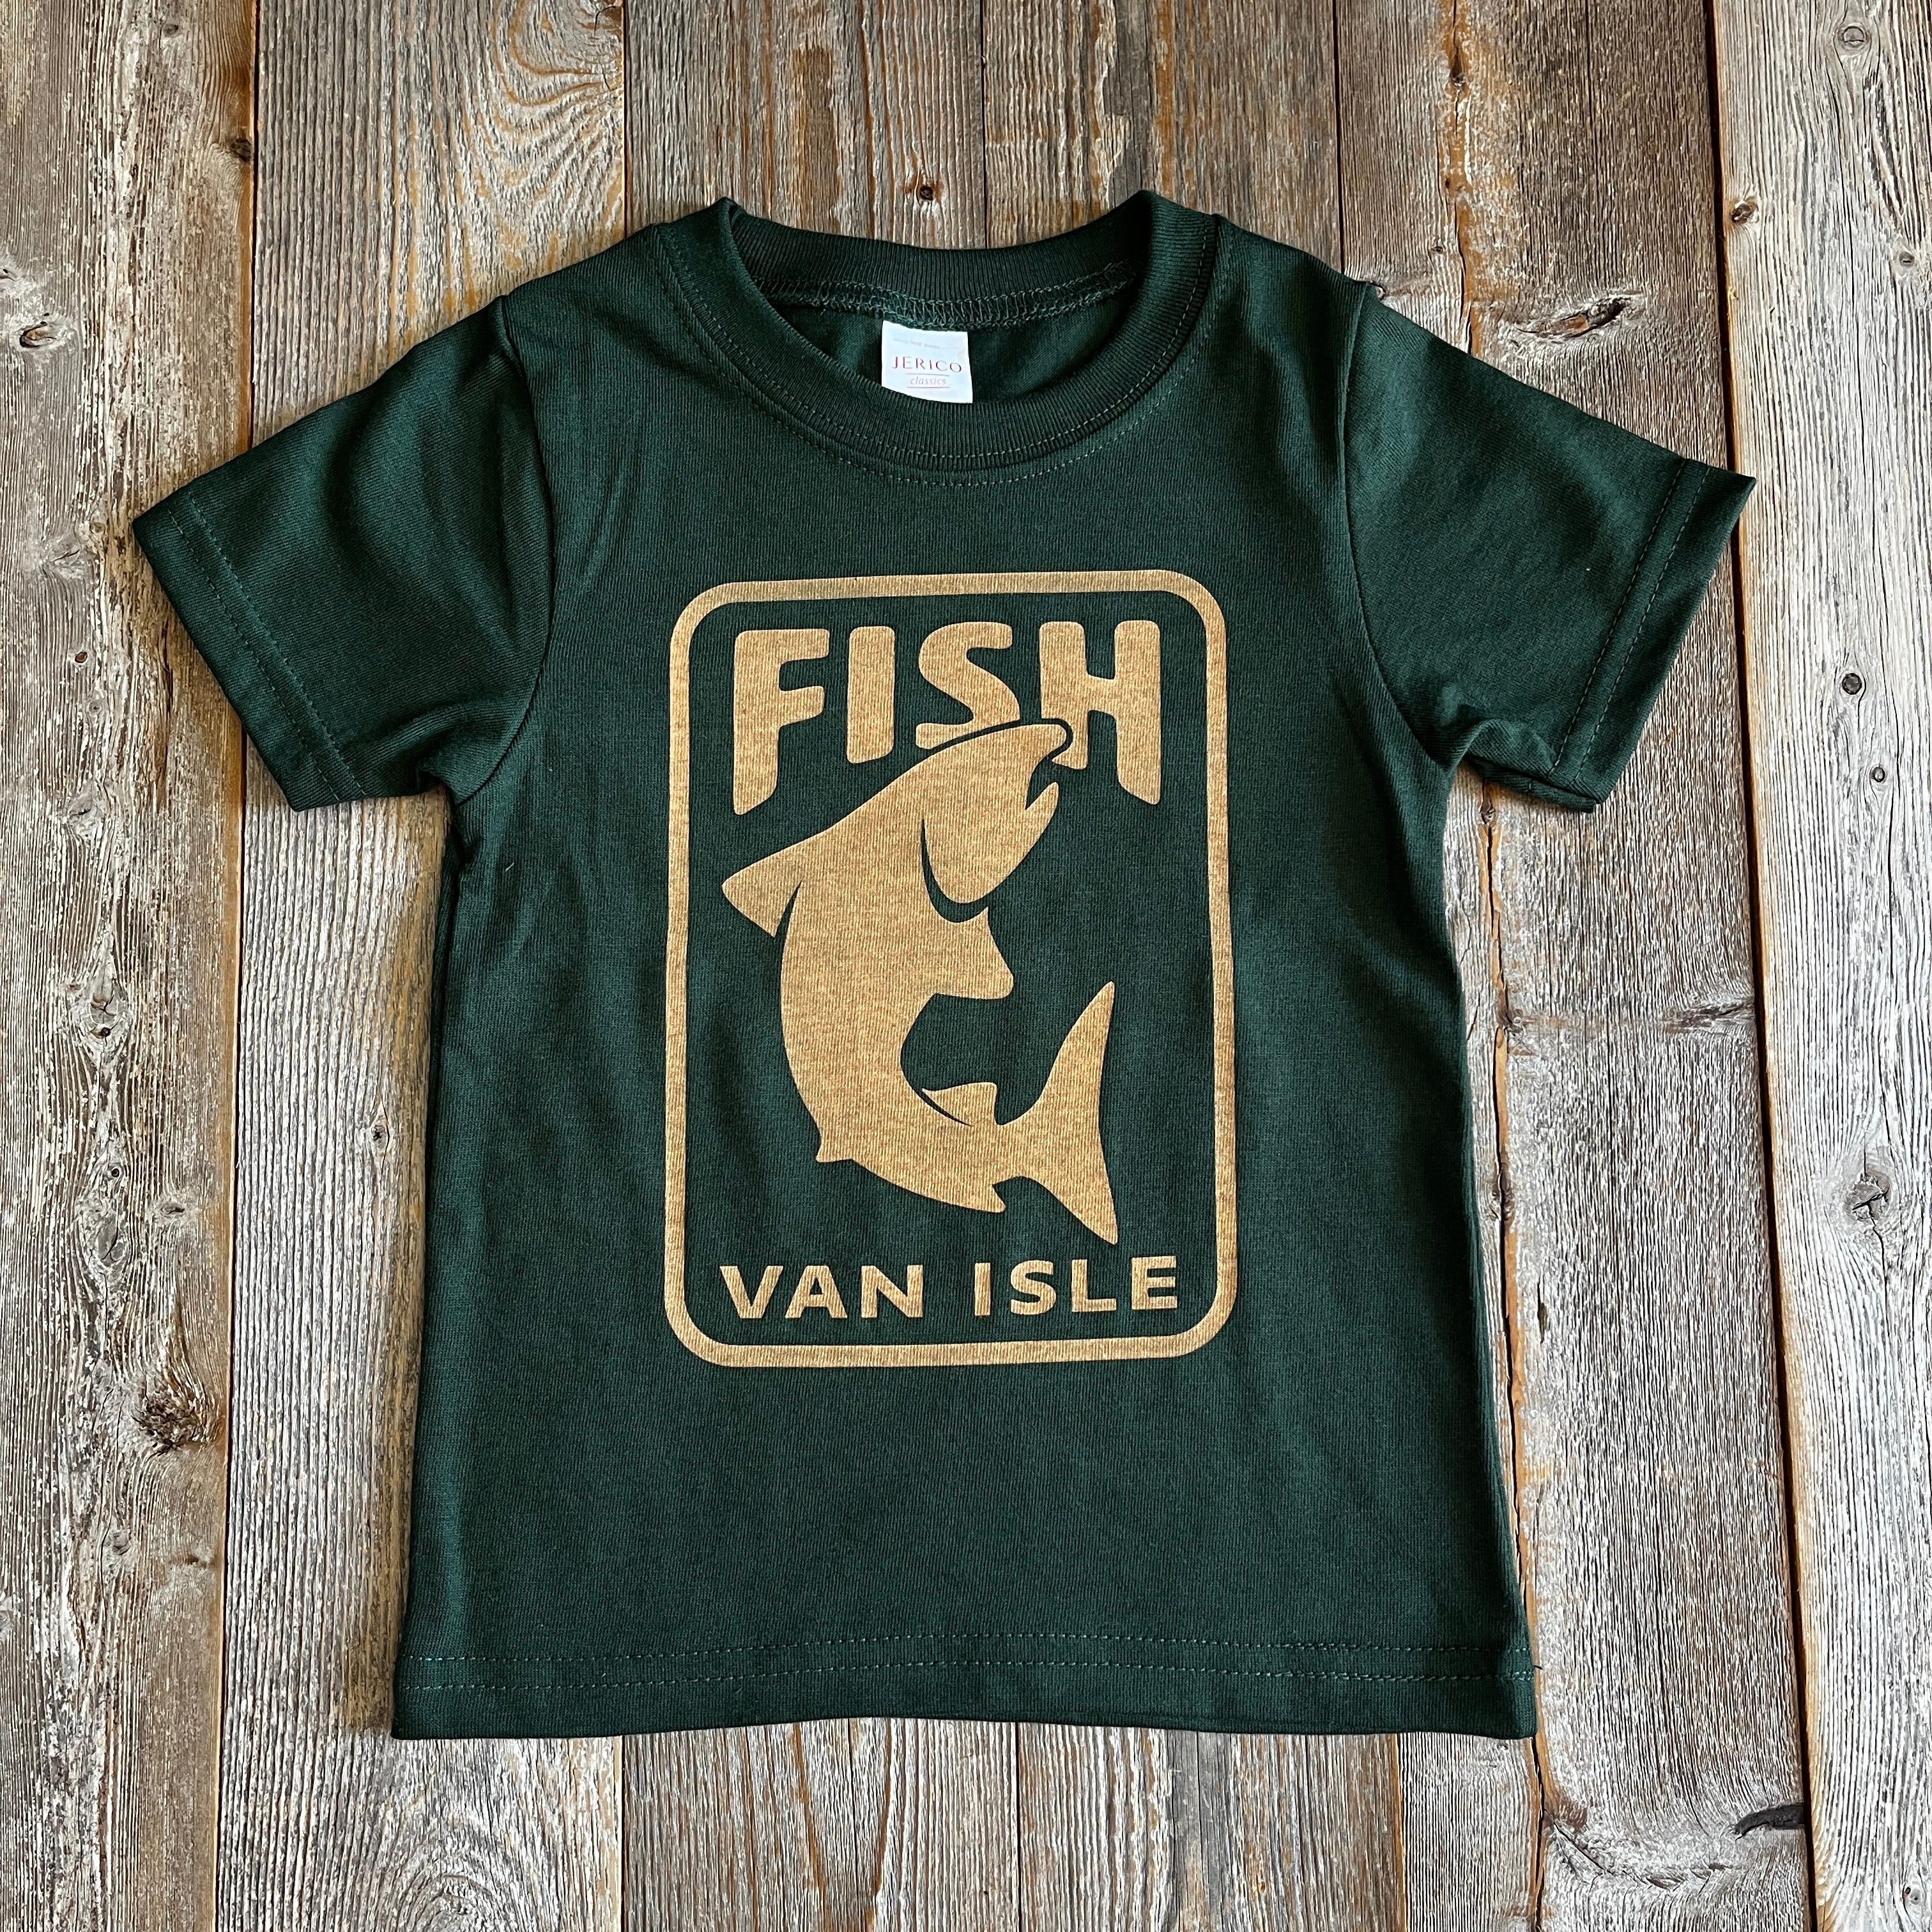 Bough & Antler Kids “Fish Van Isle” Tee